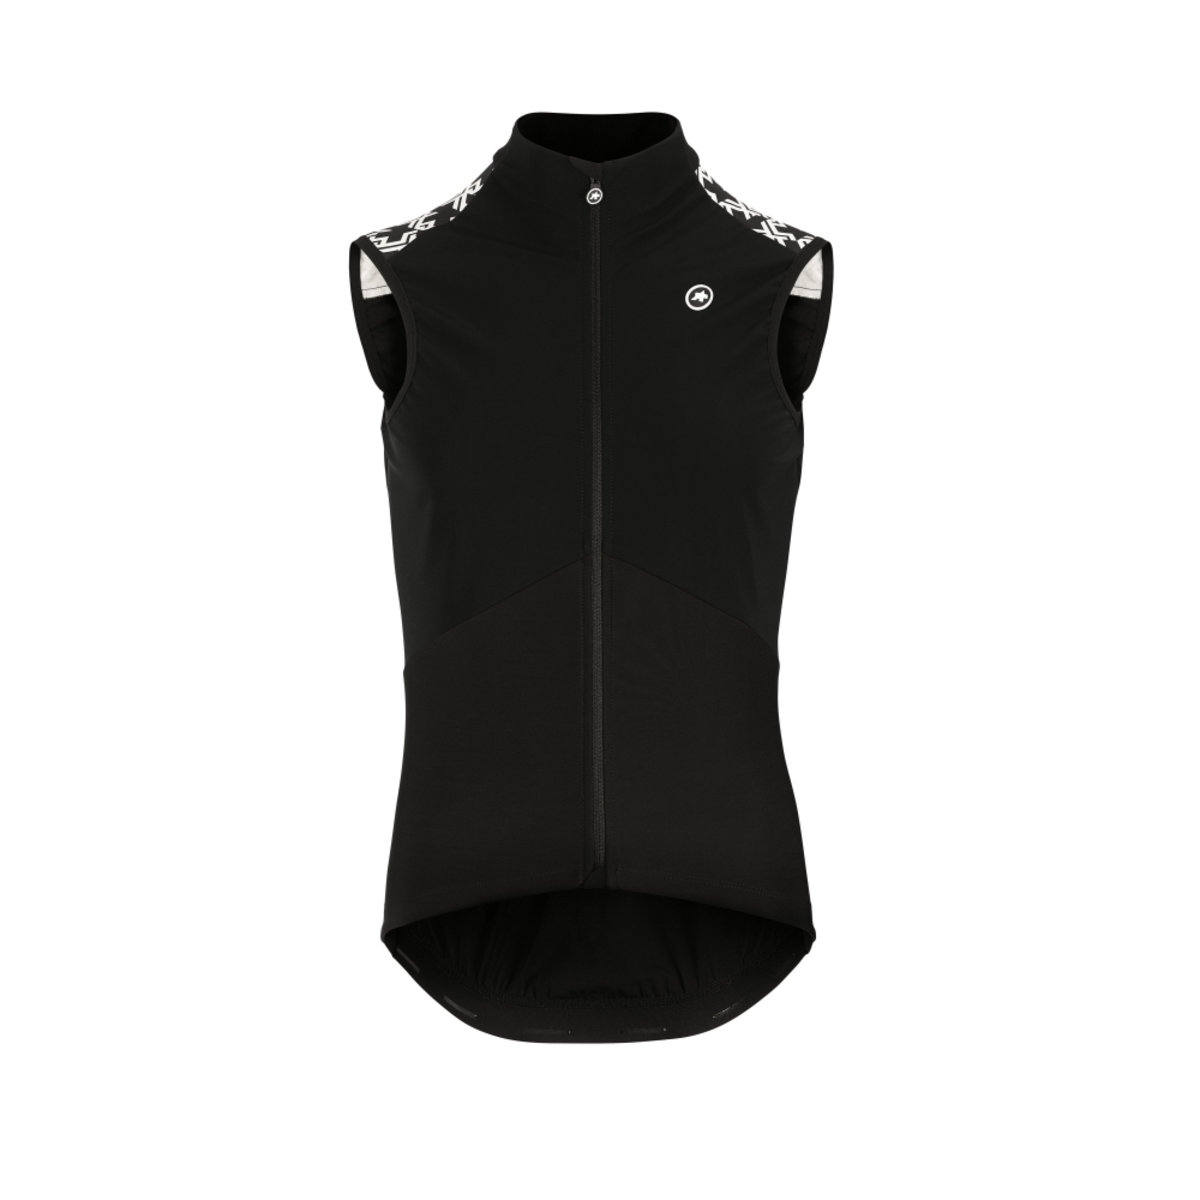 Жилетка ASSOS Mille GT Spring Fall Airblock Vest Black Series, мужская, черная с белым, L фото 